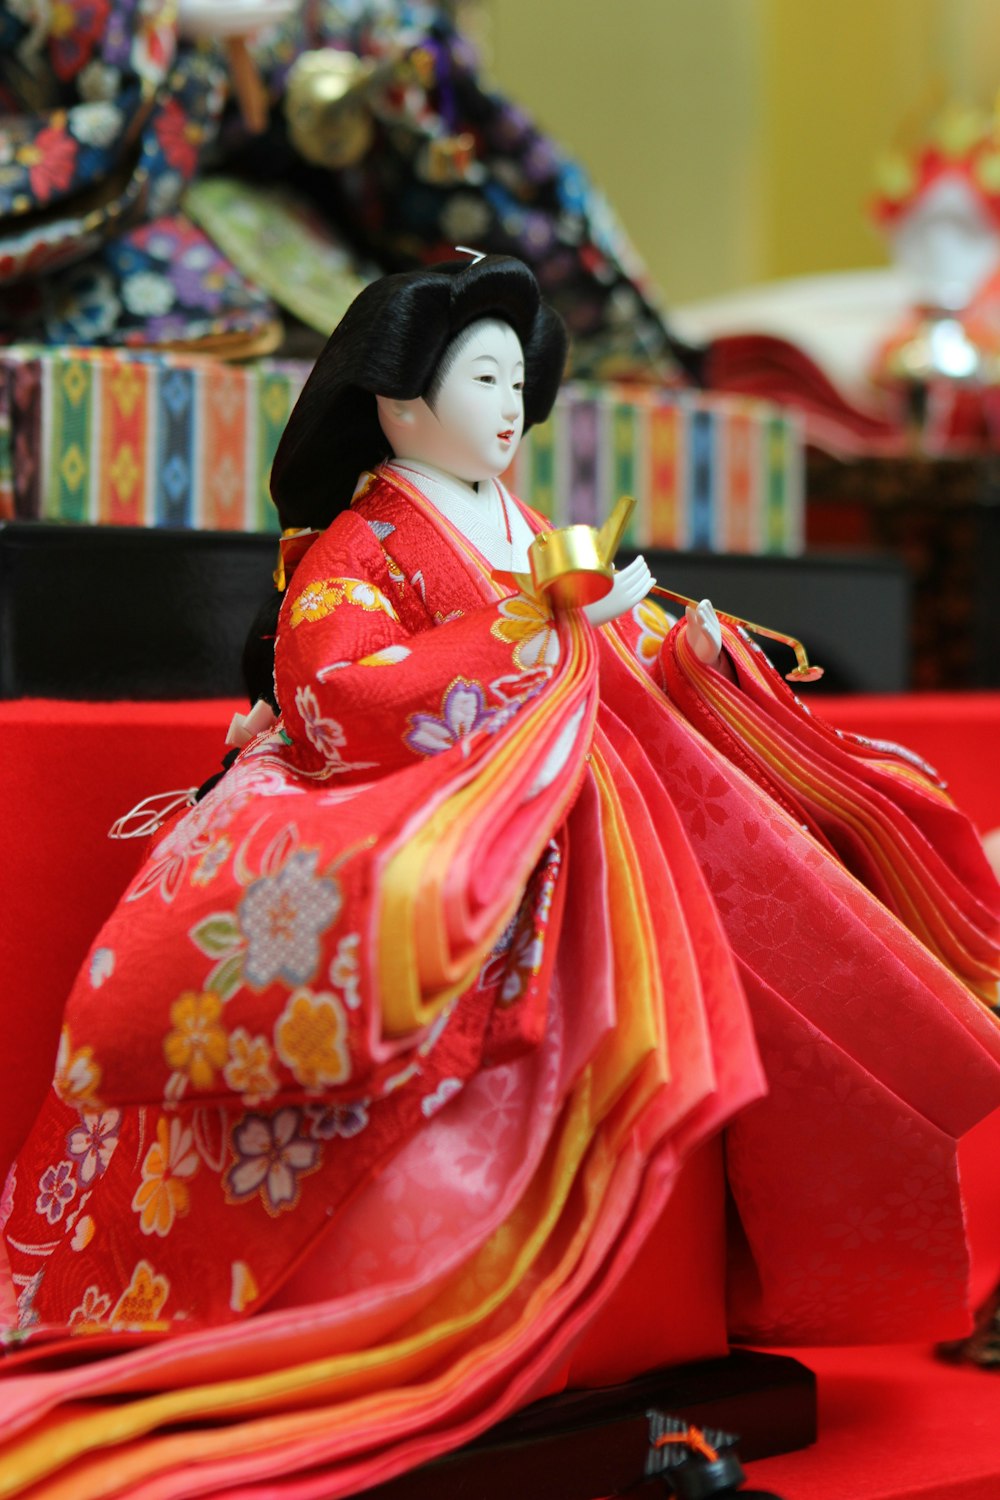 a figurine of a woman in a red kimono